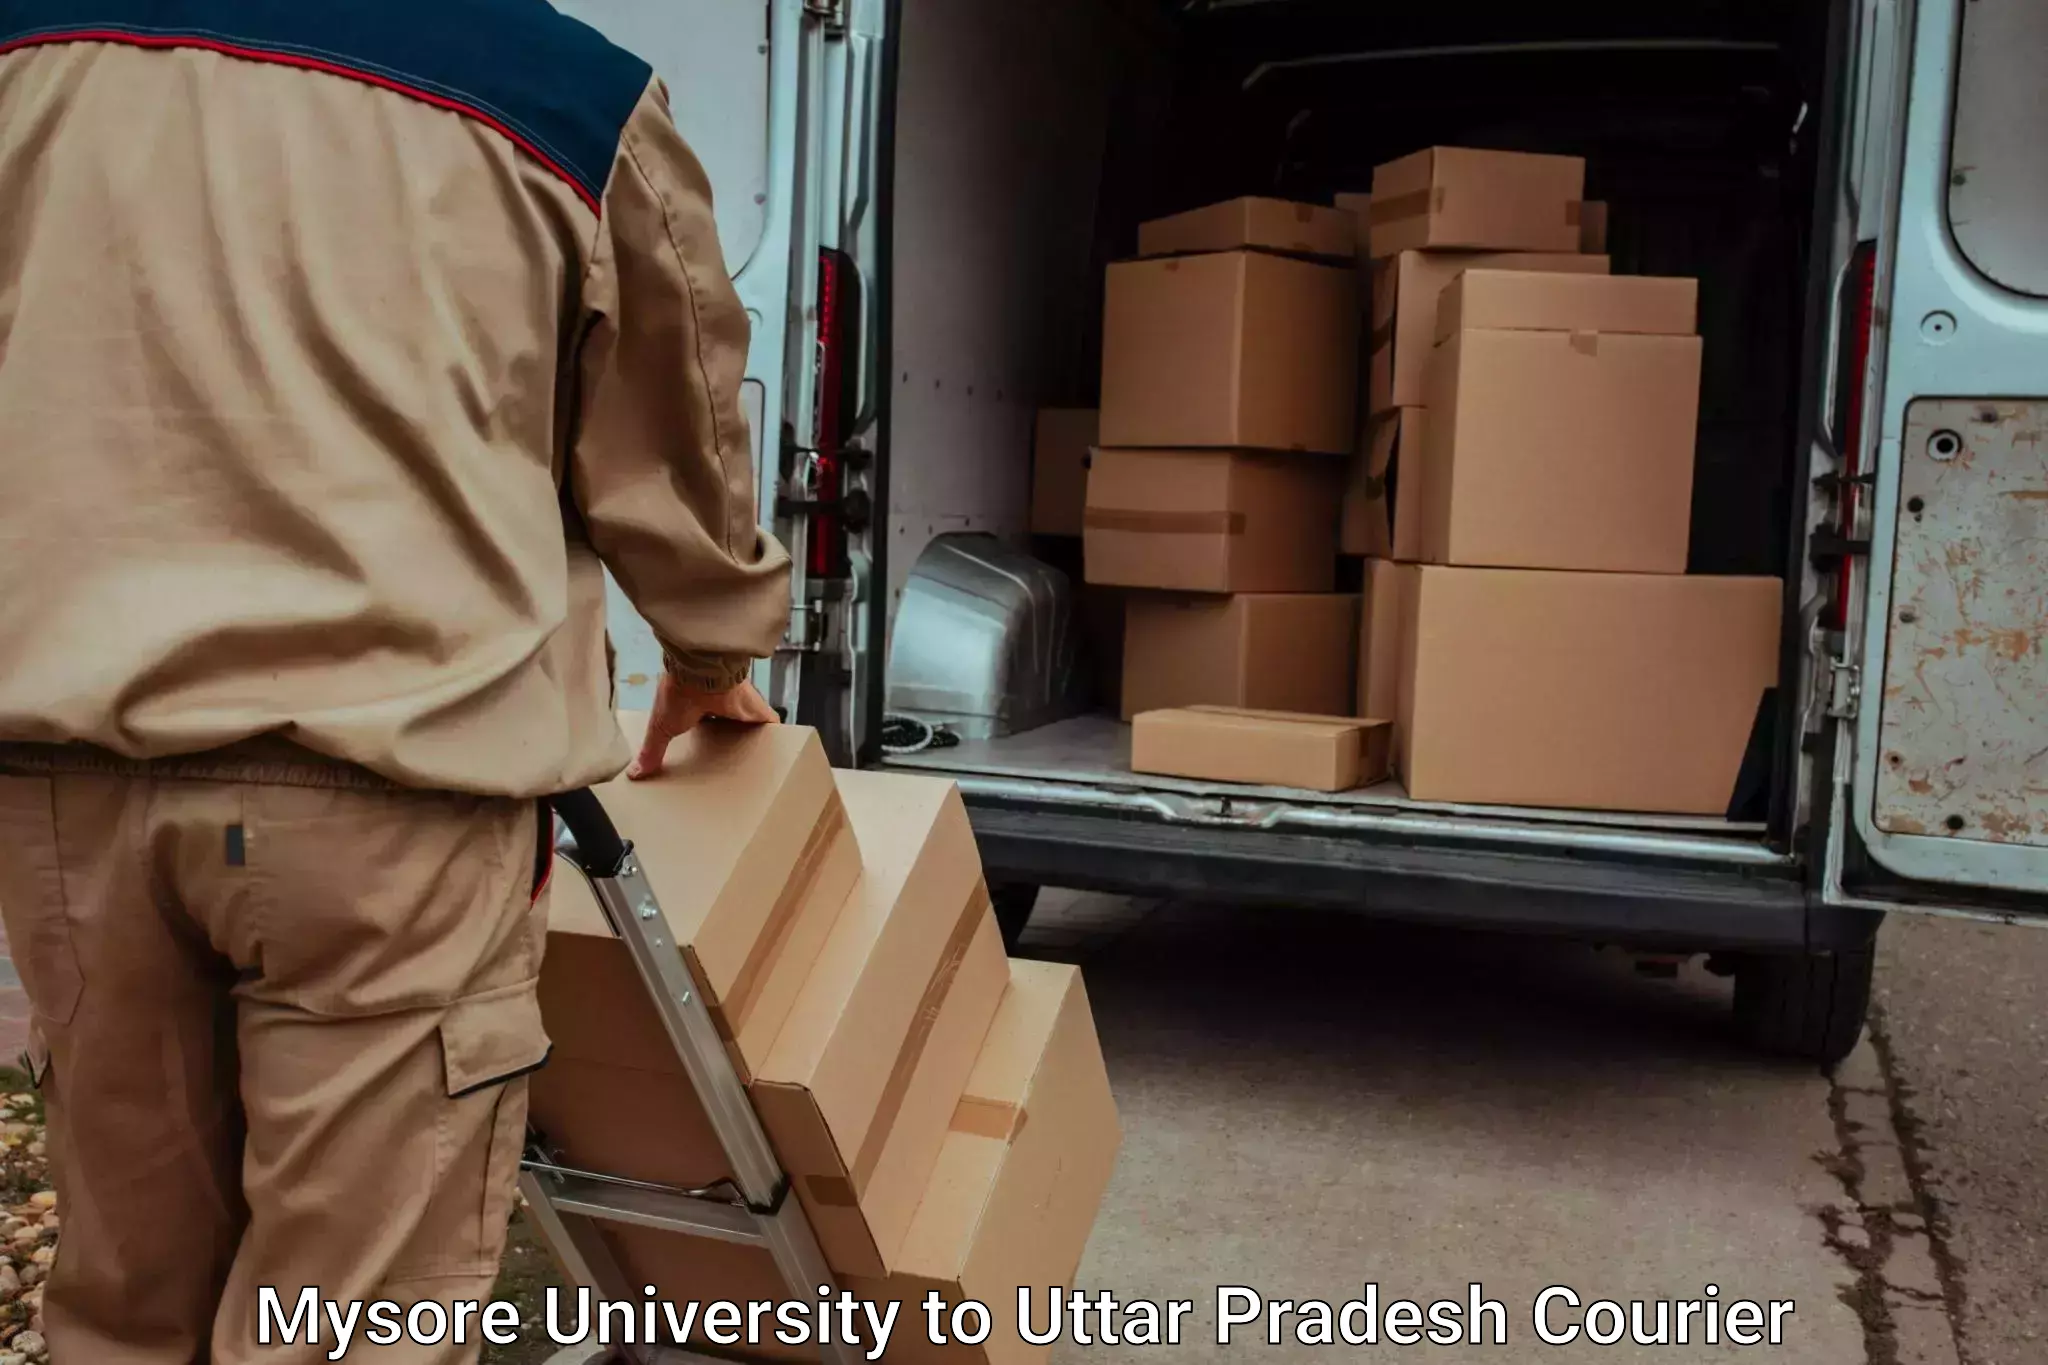 Furniture moving experts Mysore University to Aligarh